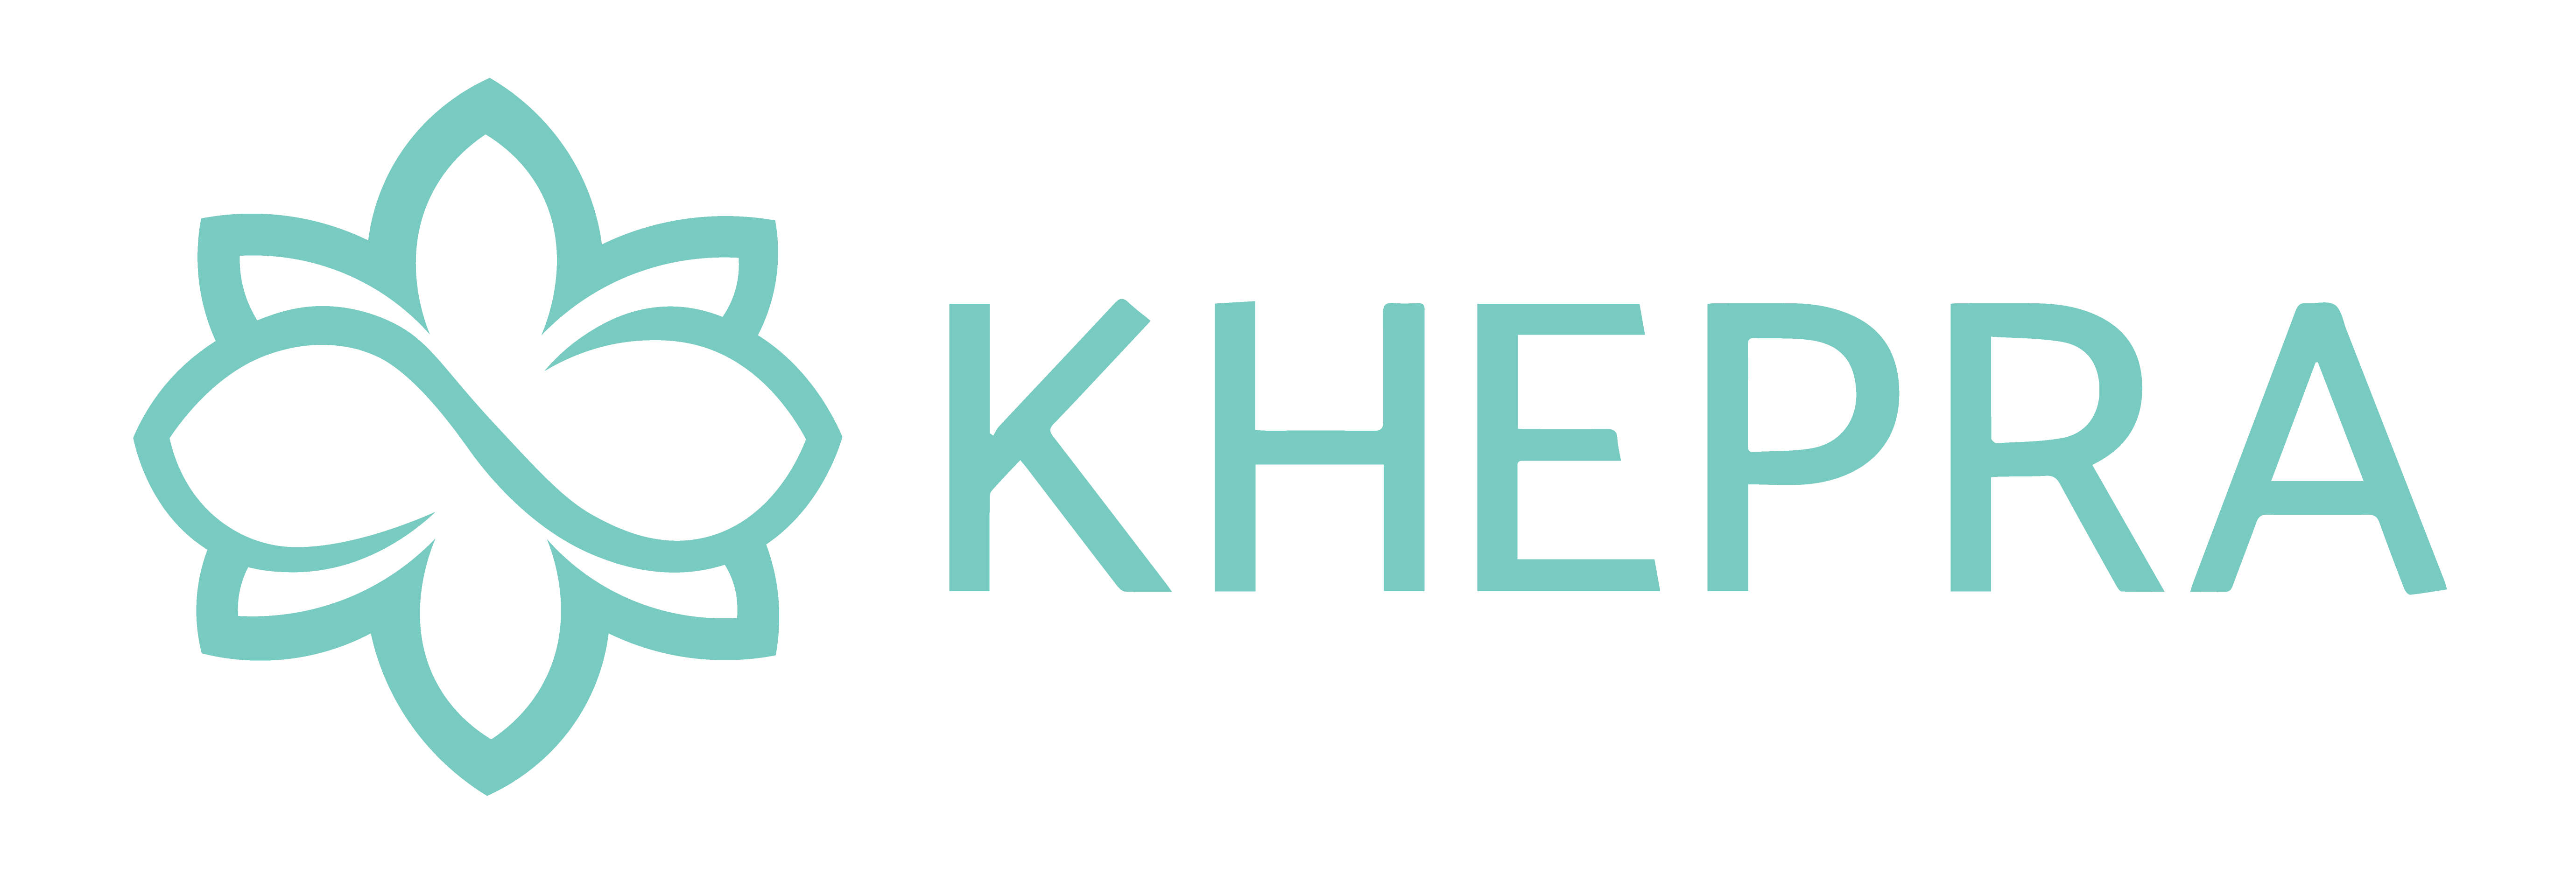 Khepra - Knowde